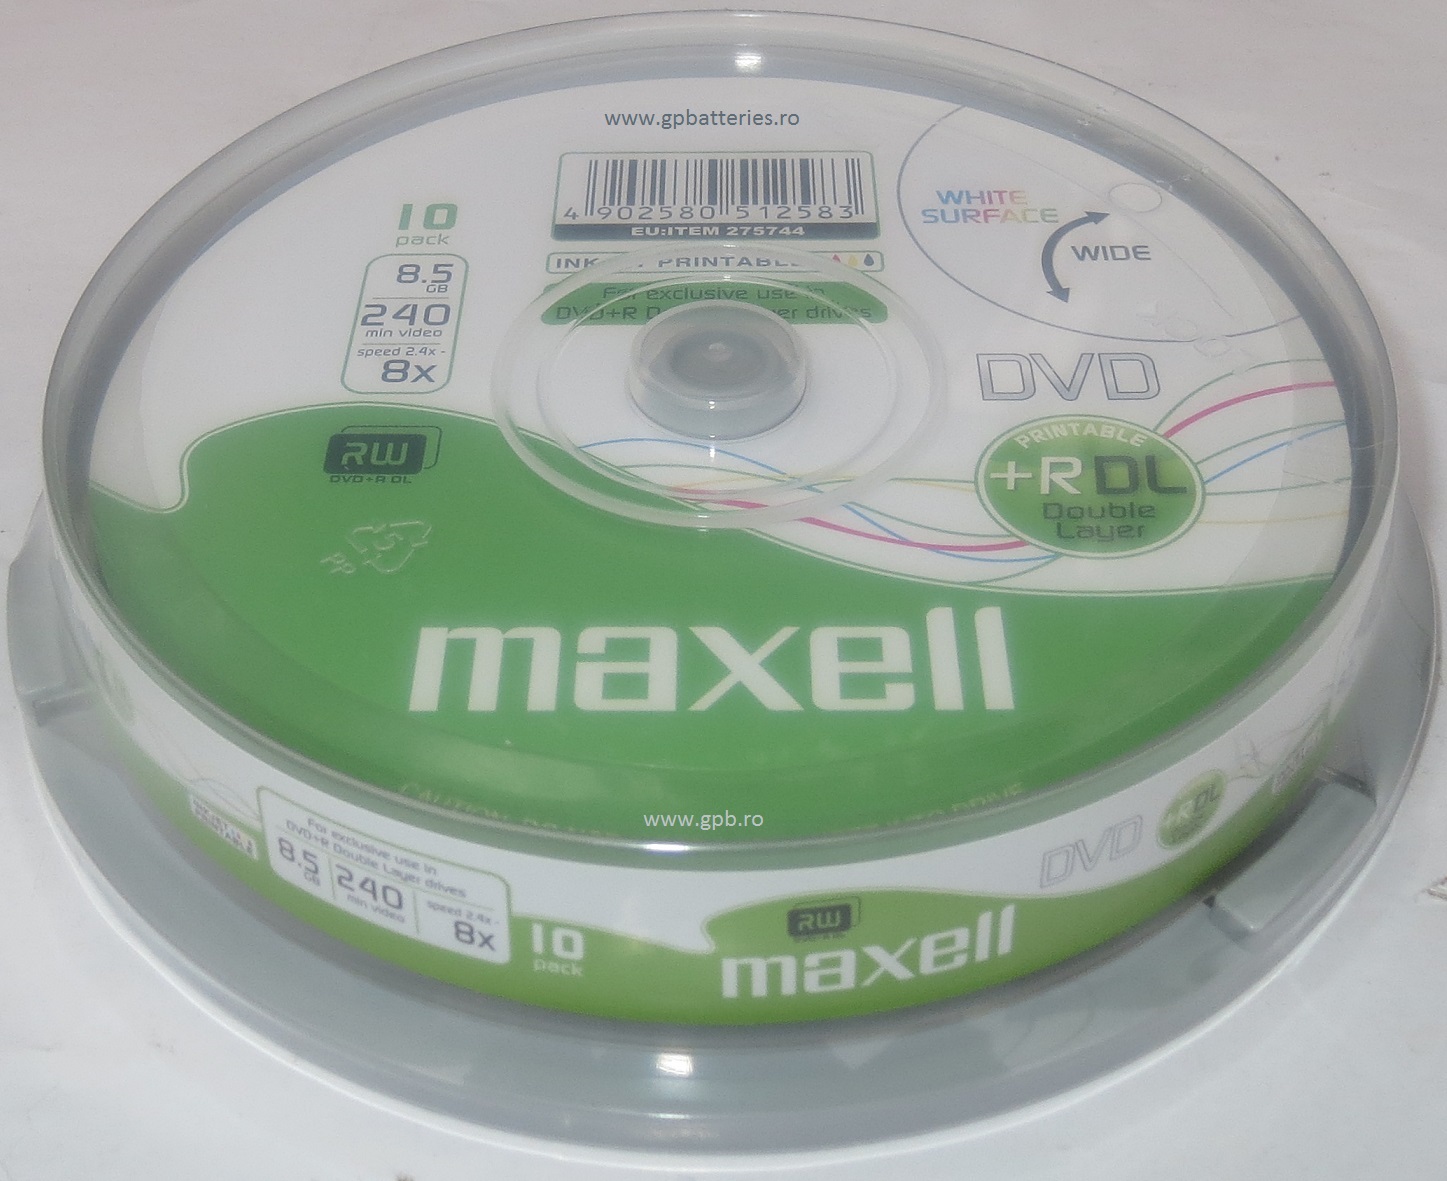 Dual layer DVD +++ R 8,5Gb 8x 240 min printabil Maxell 275744